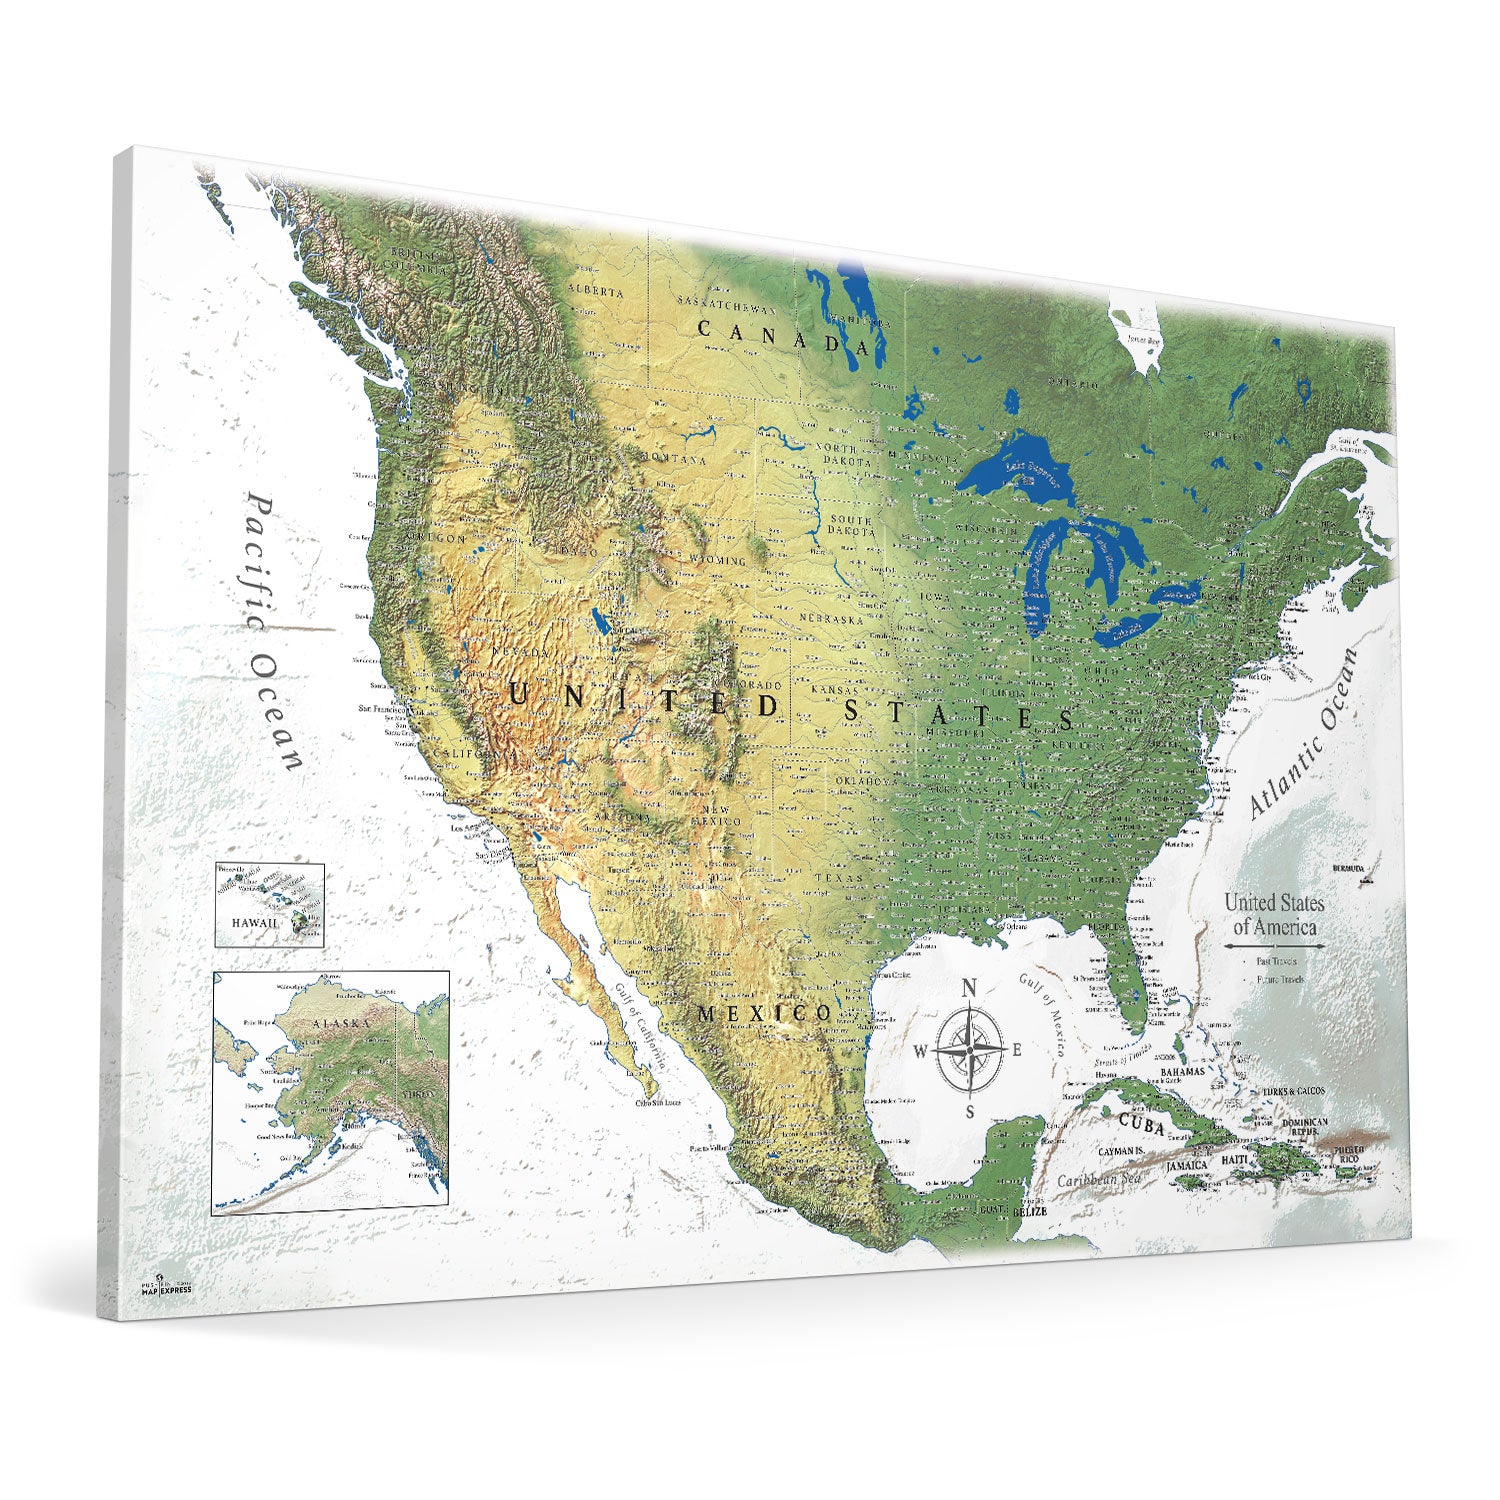 The Adventurer USA Push Pin Travel Map